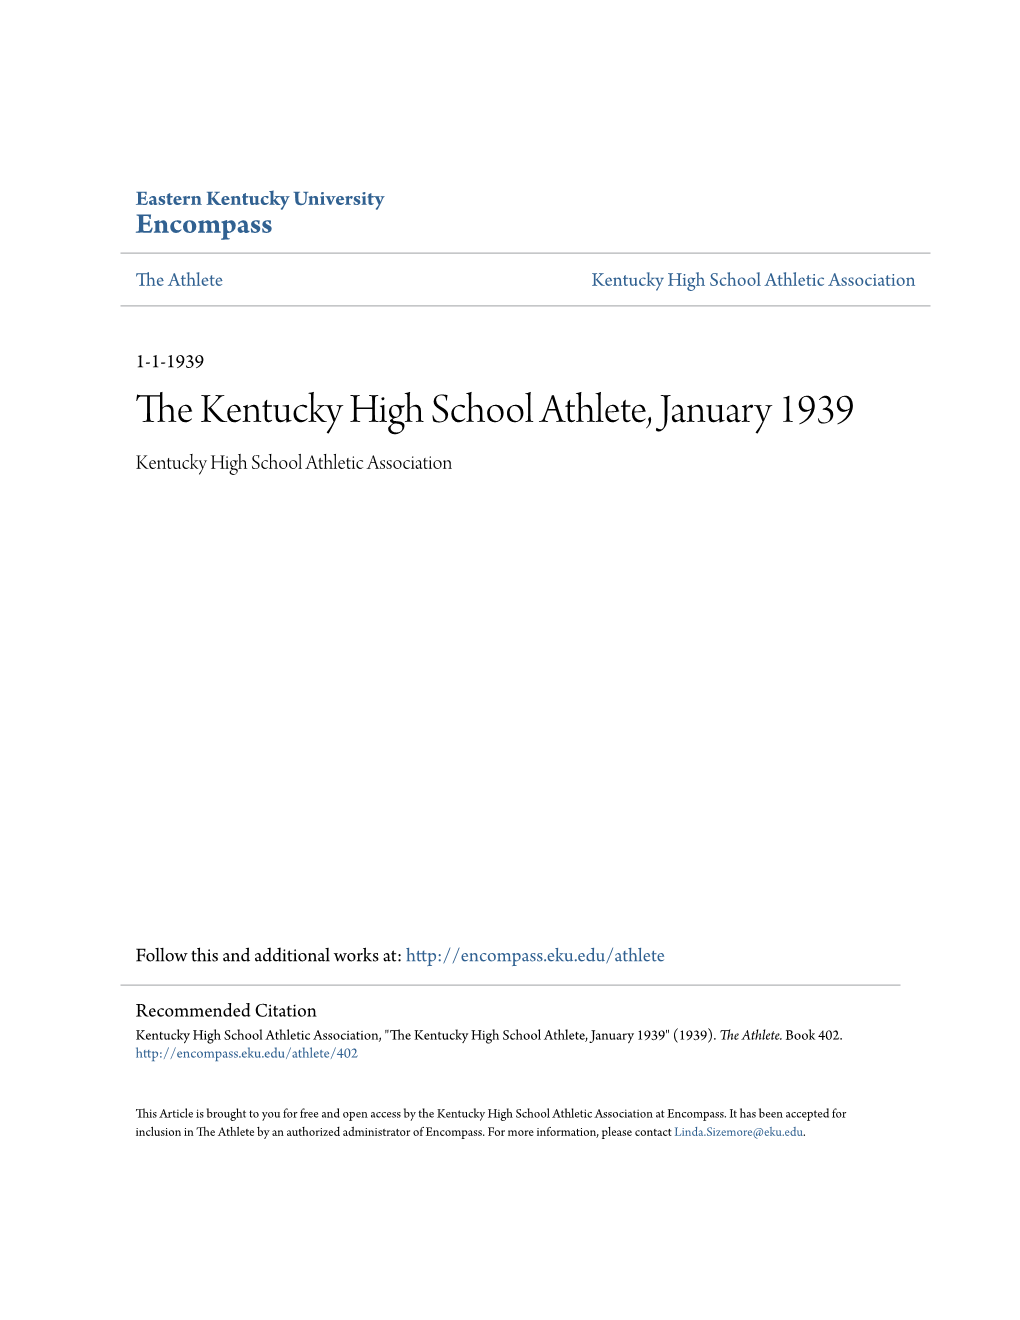 The Kentucky High School Athlete, January 1939 Kentucky High School Athletic Association